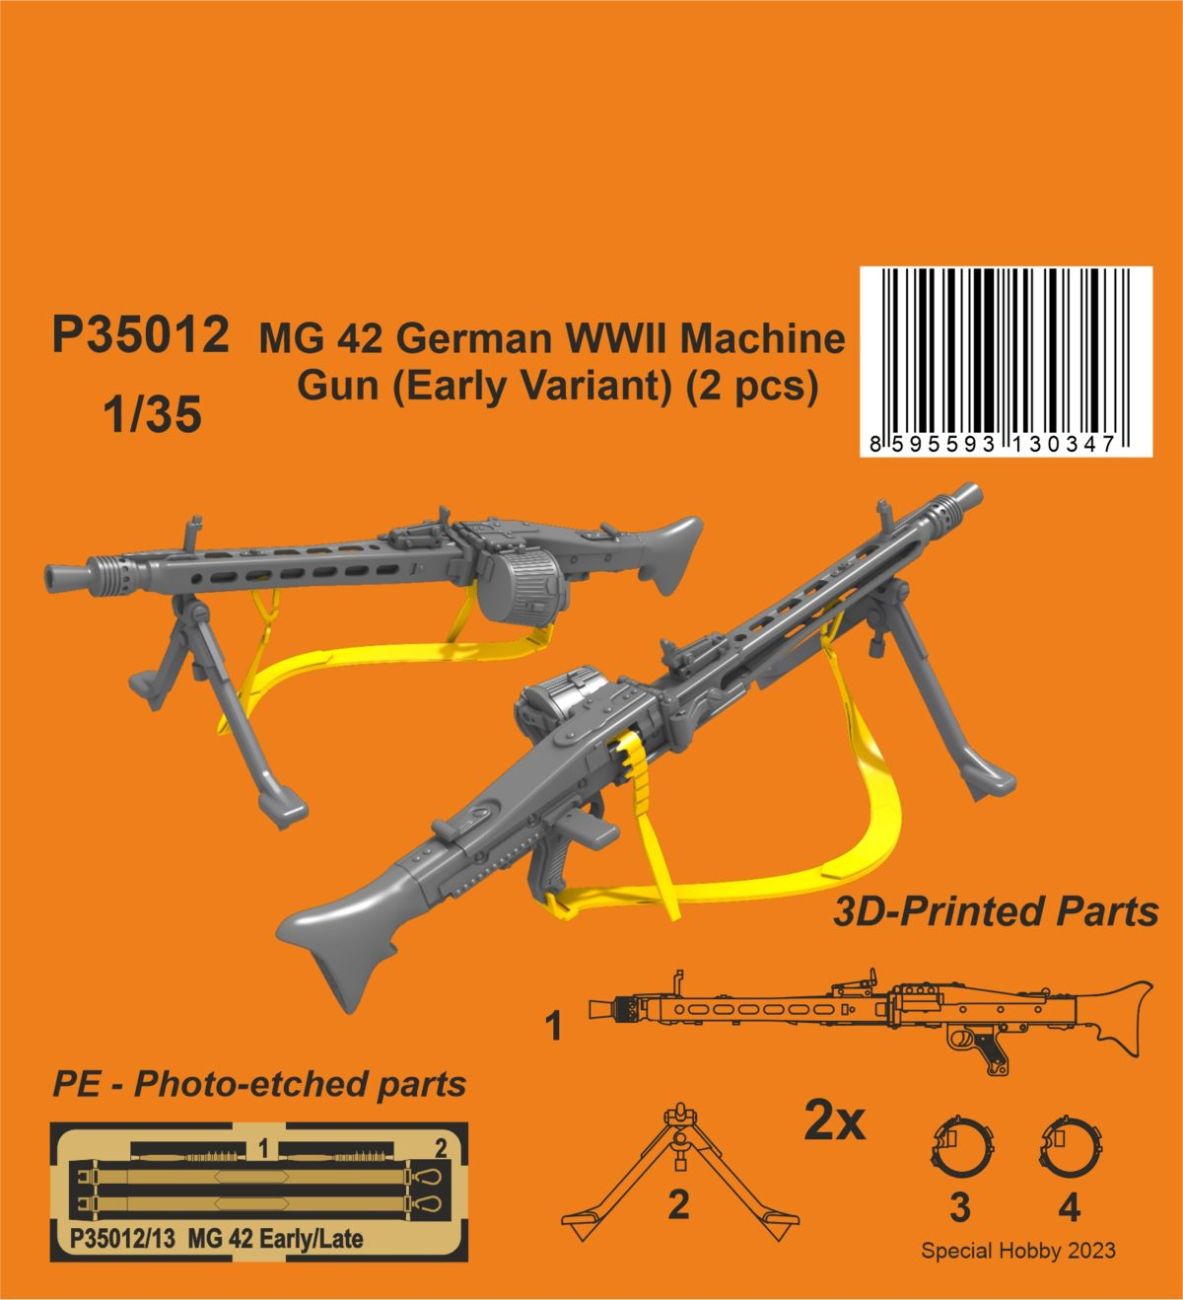 1:35 MG 42 German WWII Machine Gun (Early Variant)